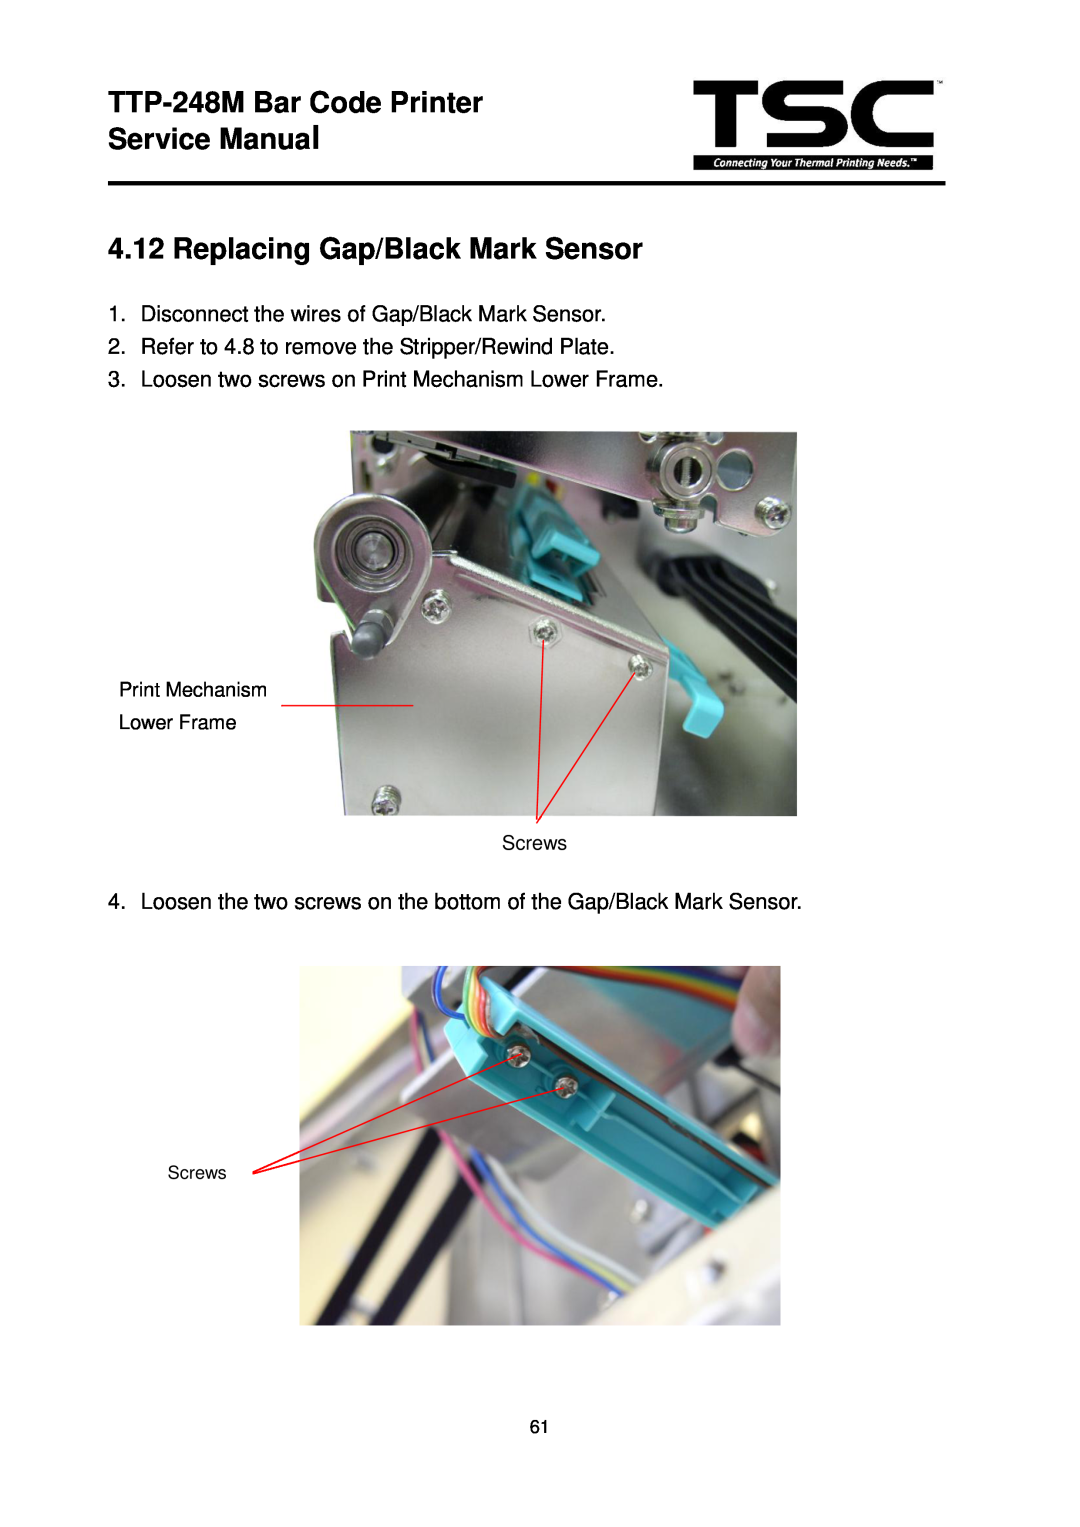 The Speaker Company TTP 248M service manual Replacing Gap/Black Mark Sensor, TTP-248M Bar Code Printer Service Manual 